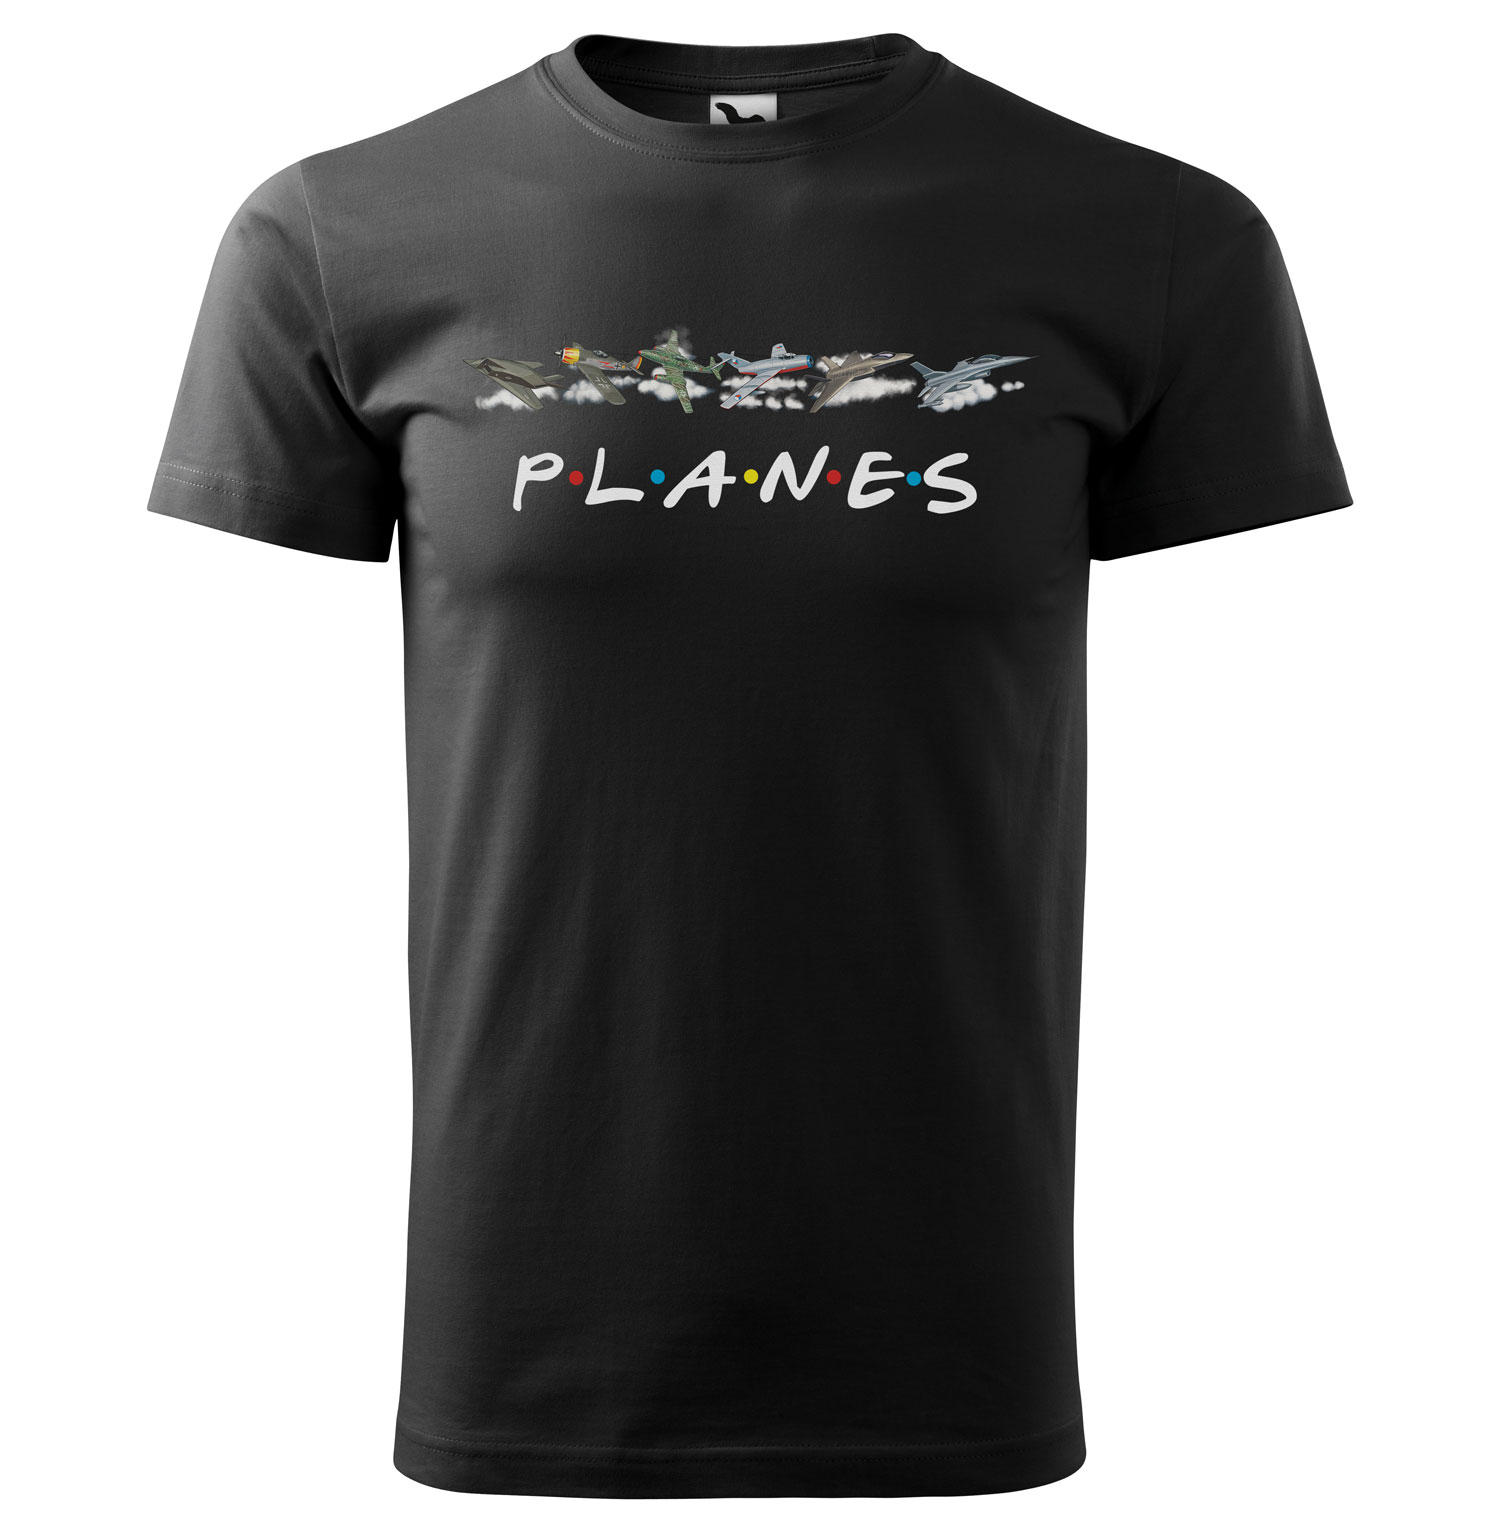 Tričko Planes (Velikost: S, Typ: pro muže, Barva trička: Černá)